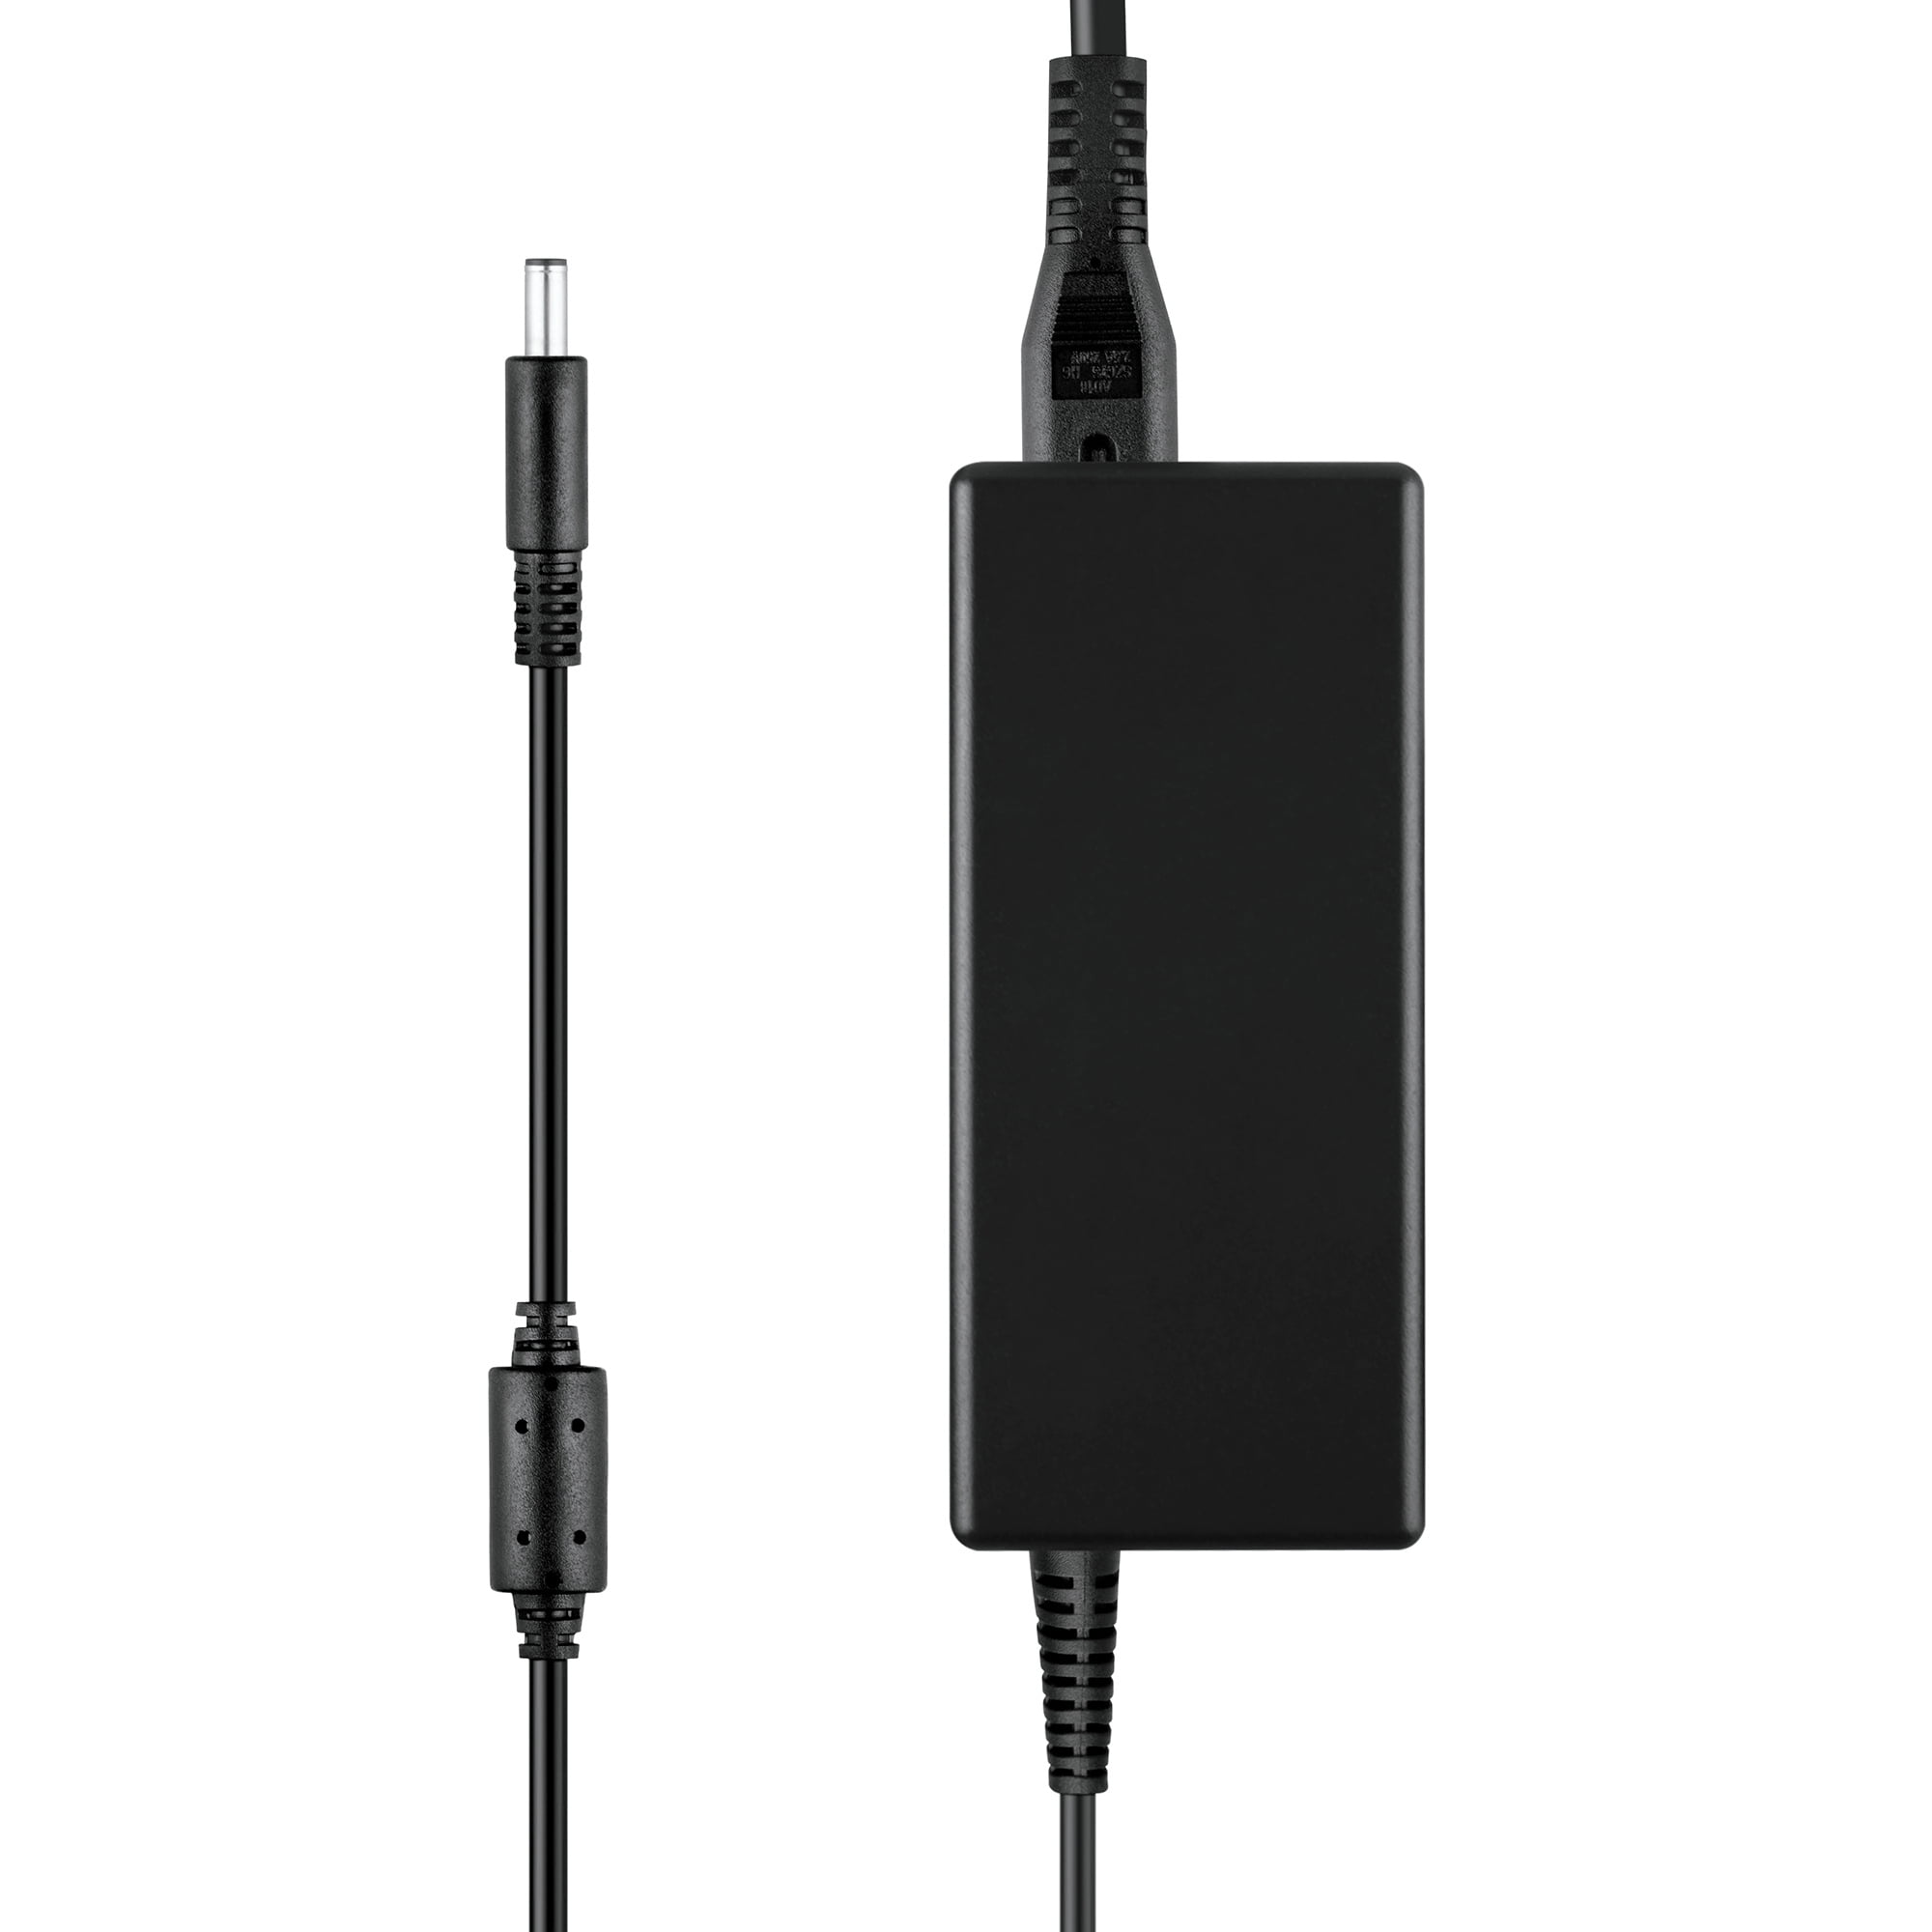 SapplySource USB Data Sync Cable Cord Replacement for DENON MCX8000 Digital Mixer Serato DJ Controller 